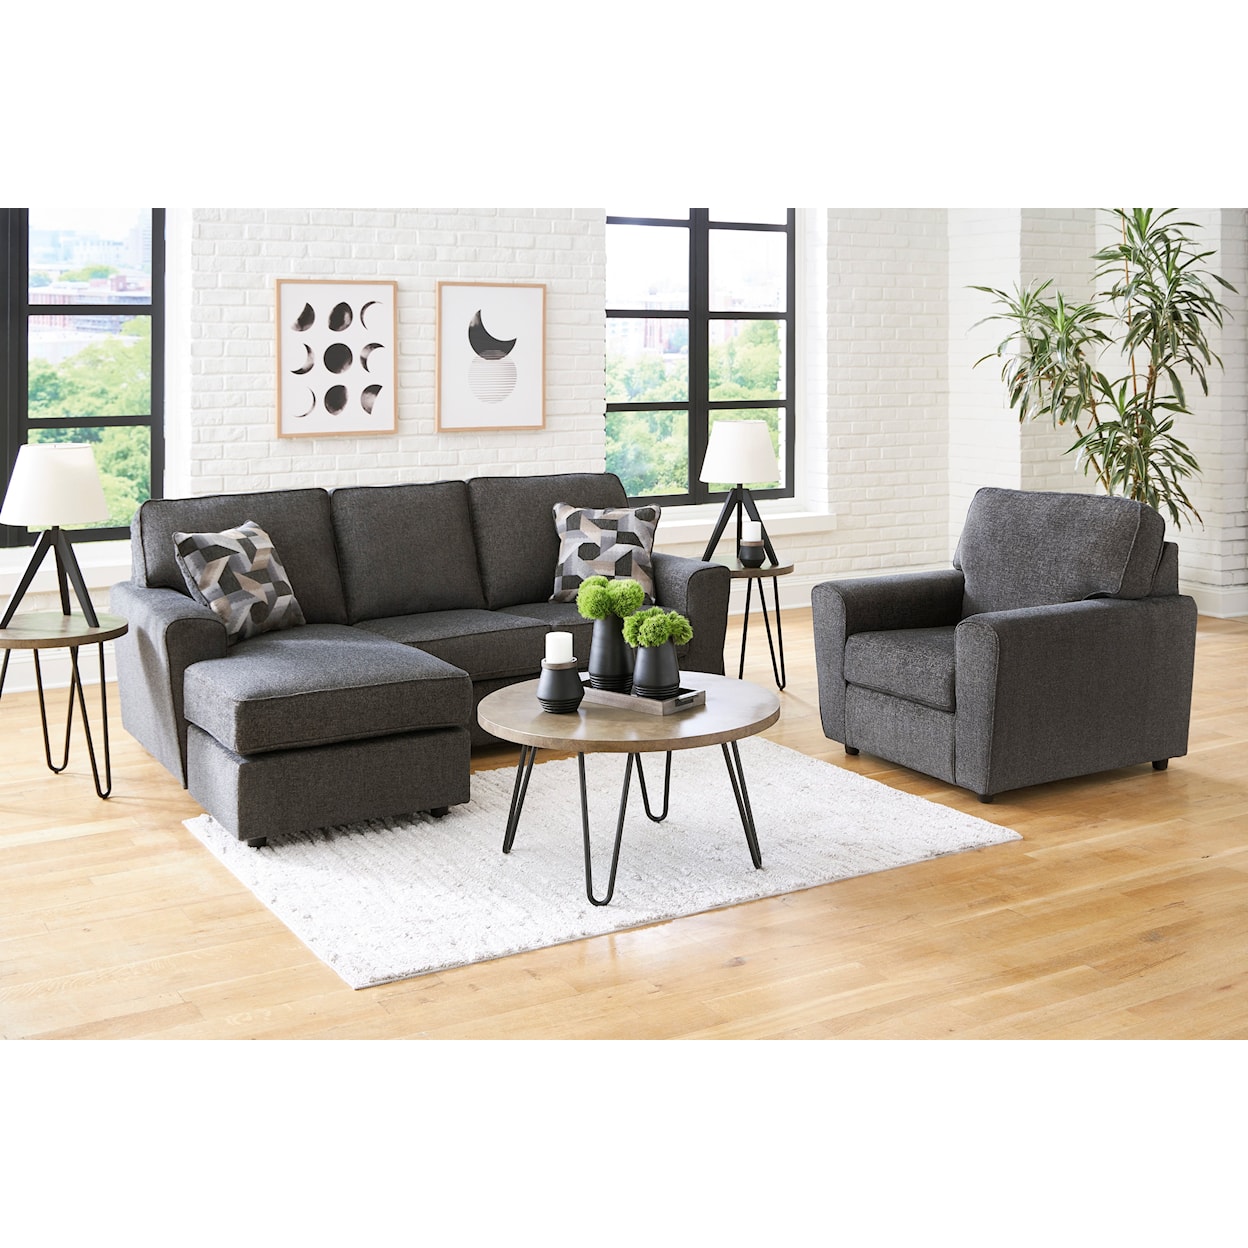 Ashley Furniture Signature Design Cascilla Living Room Set